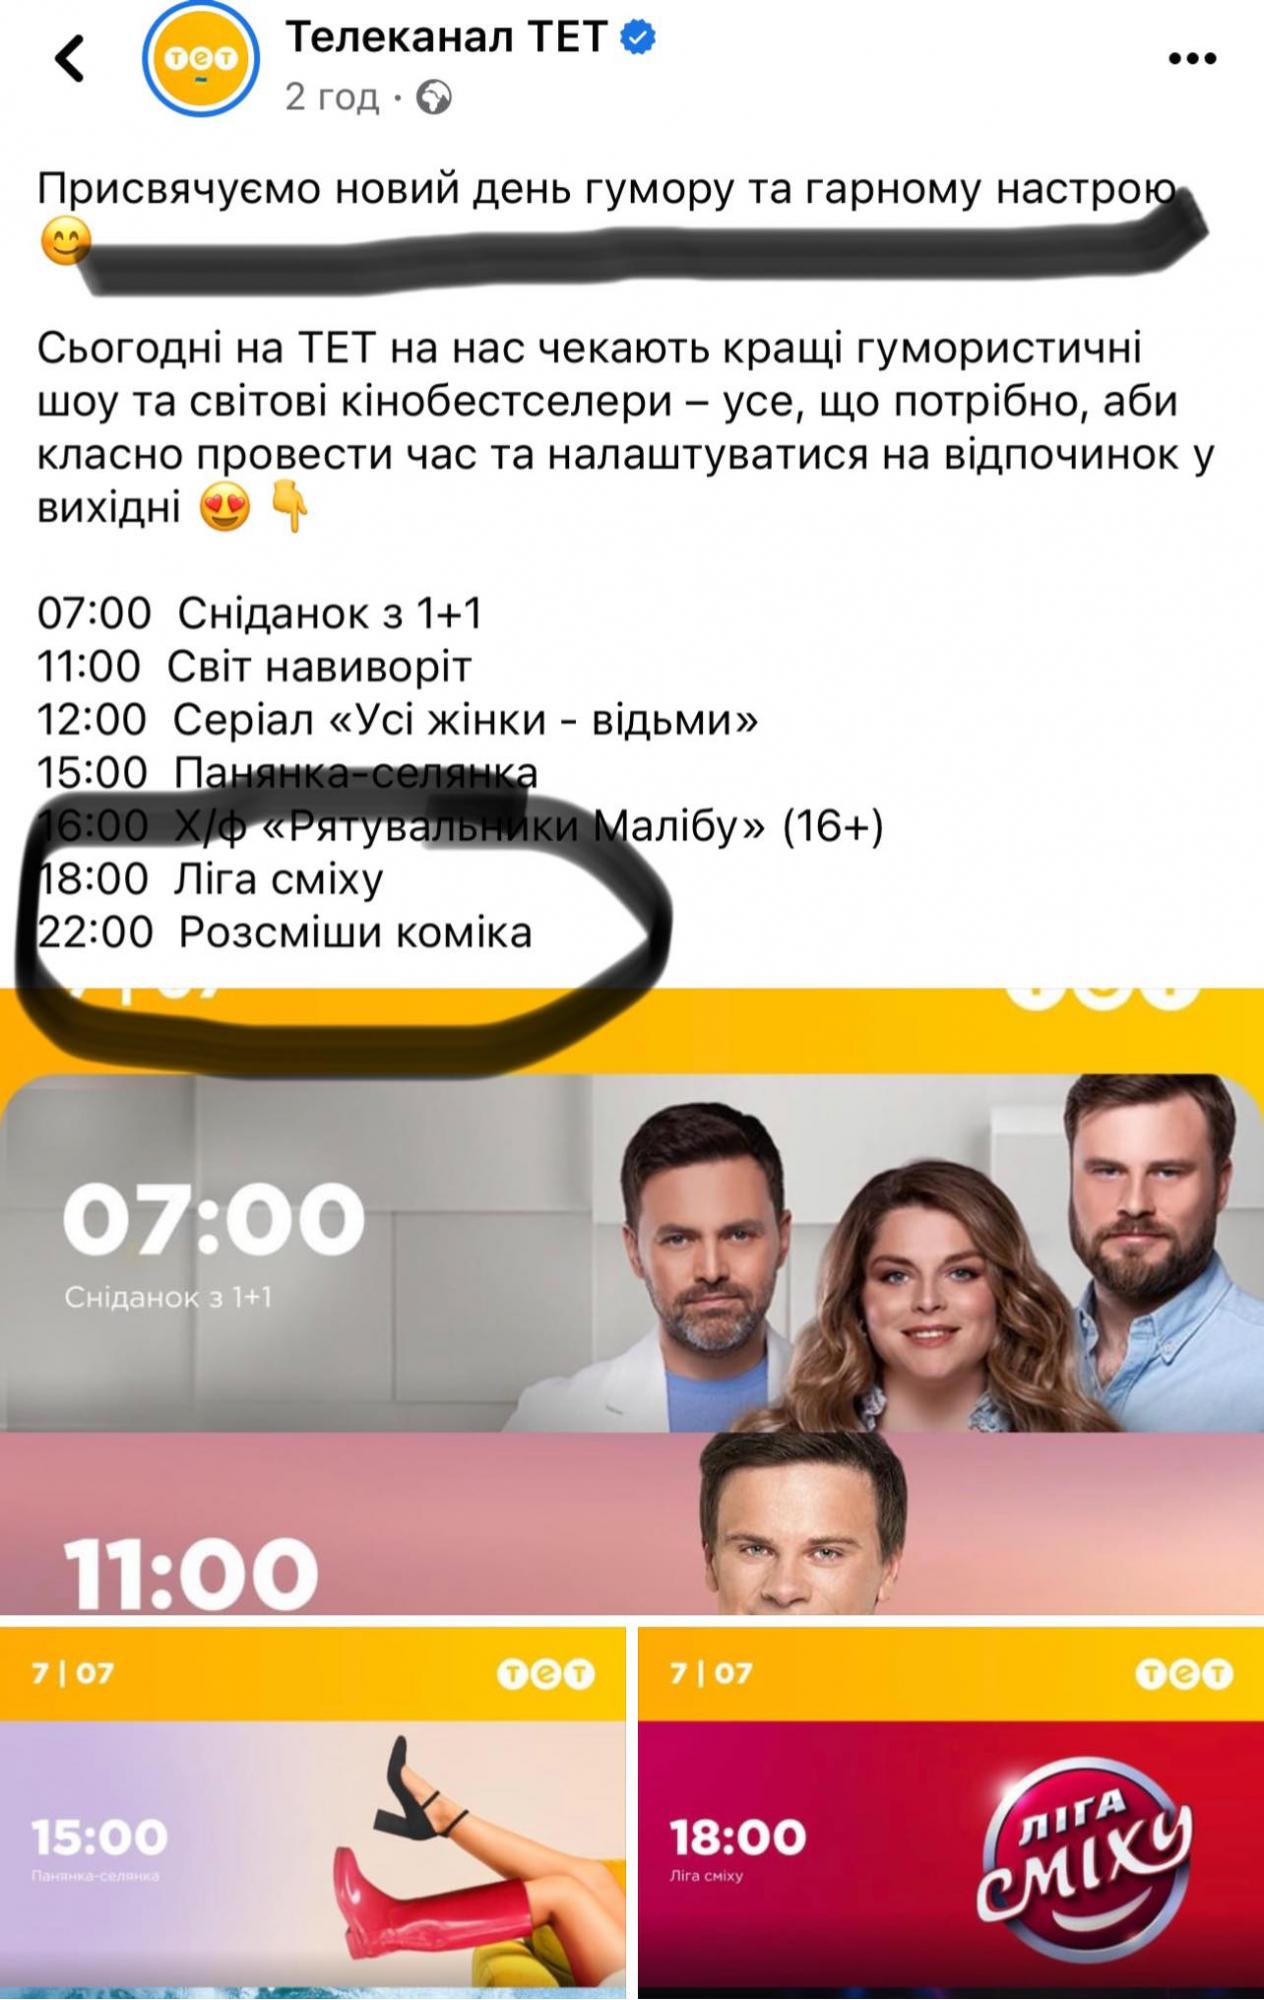 Український ТВ-канал потрапив у гучний скандал із &quot;днем гумору&quot; після ракетного удару у Львові